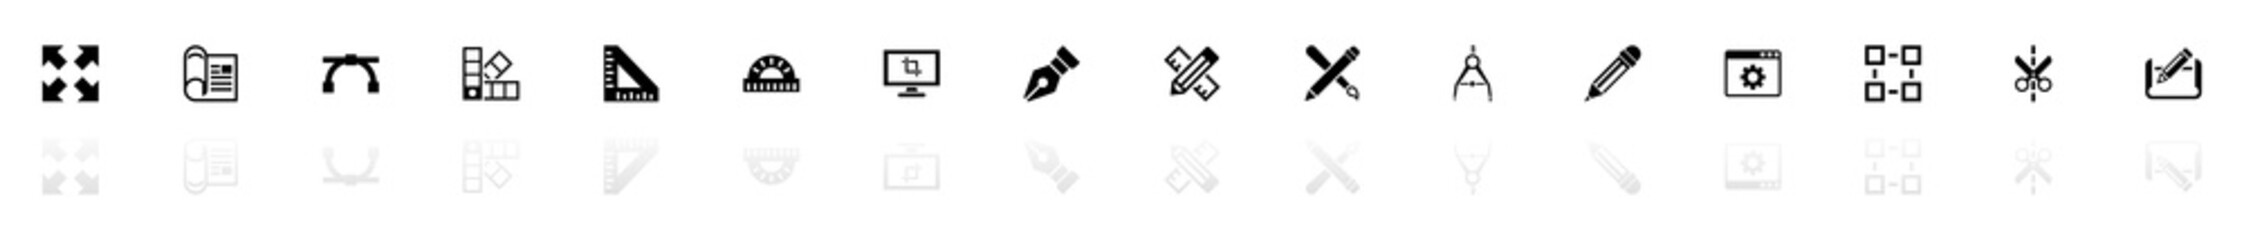 Blueprint - Flat Vector Icons